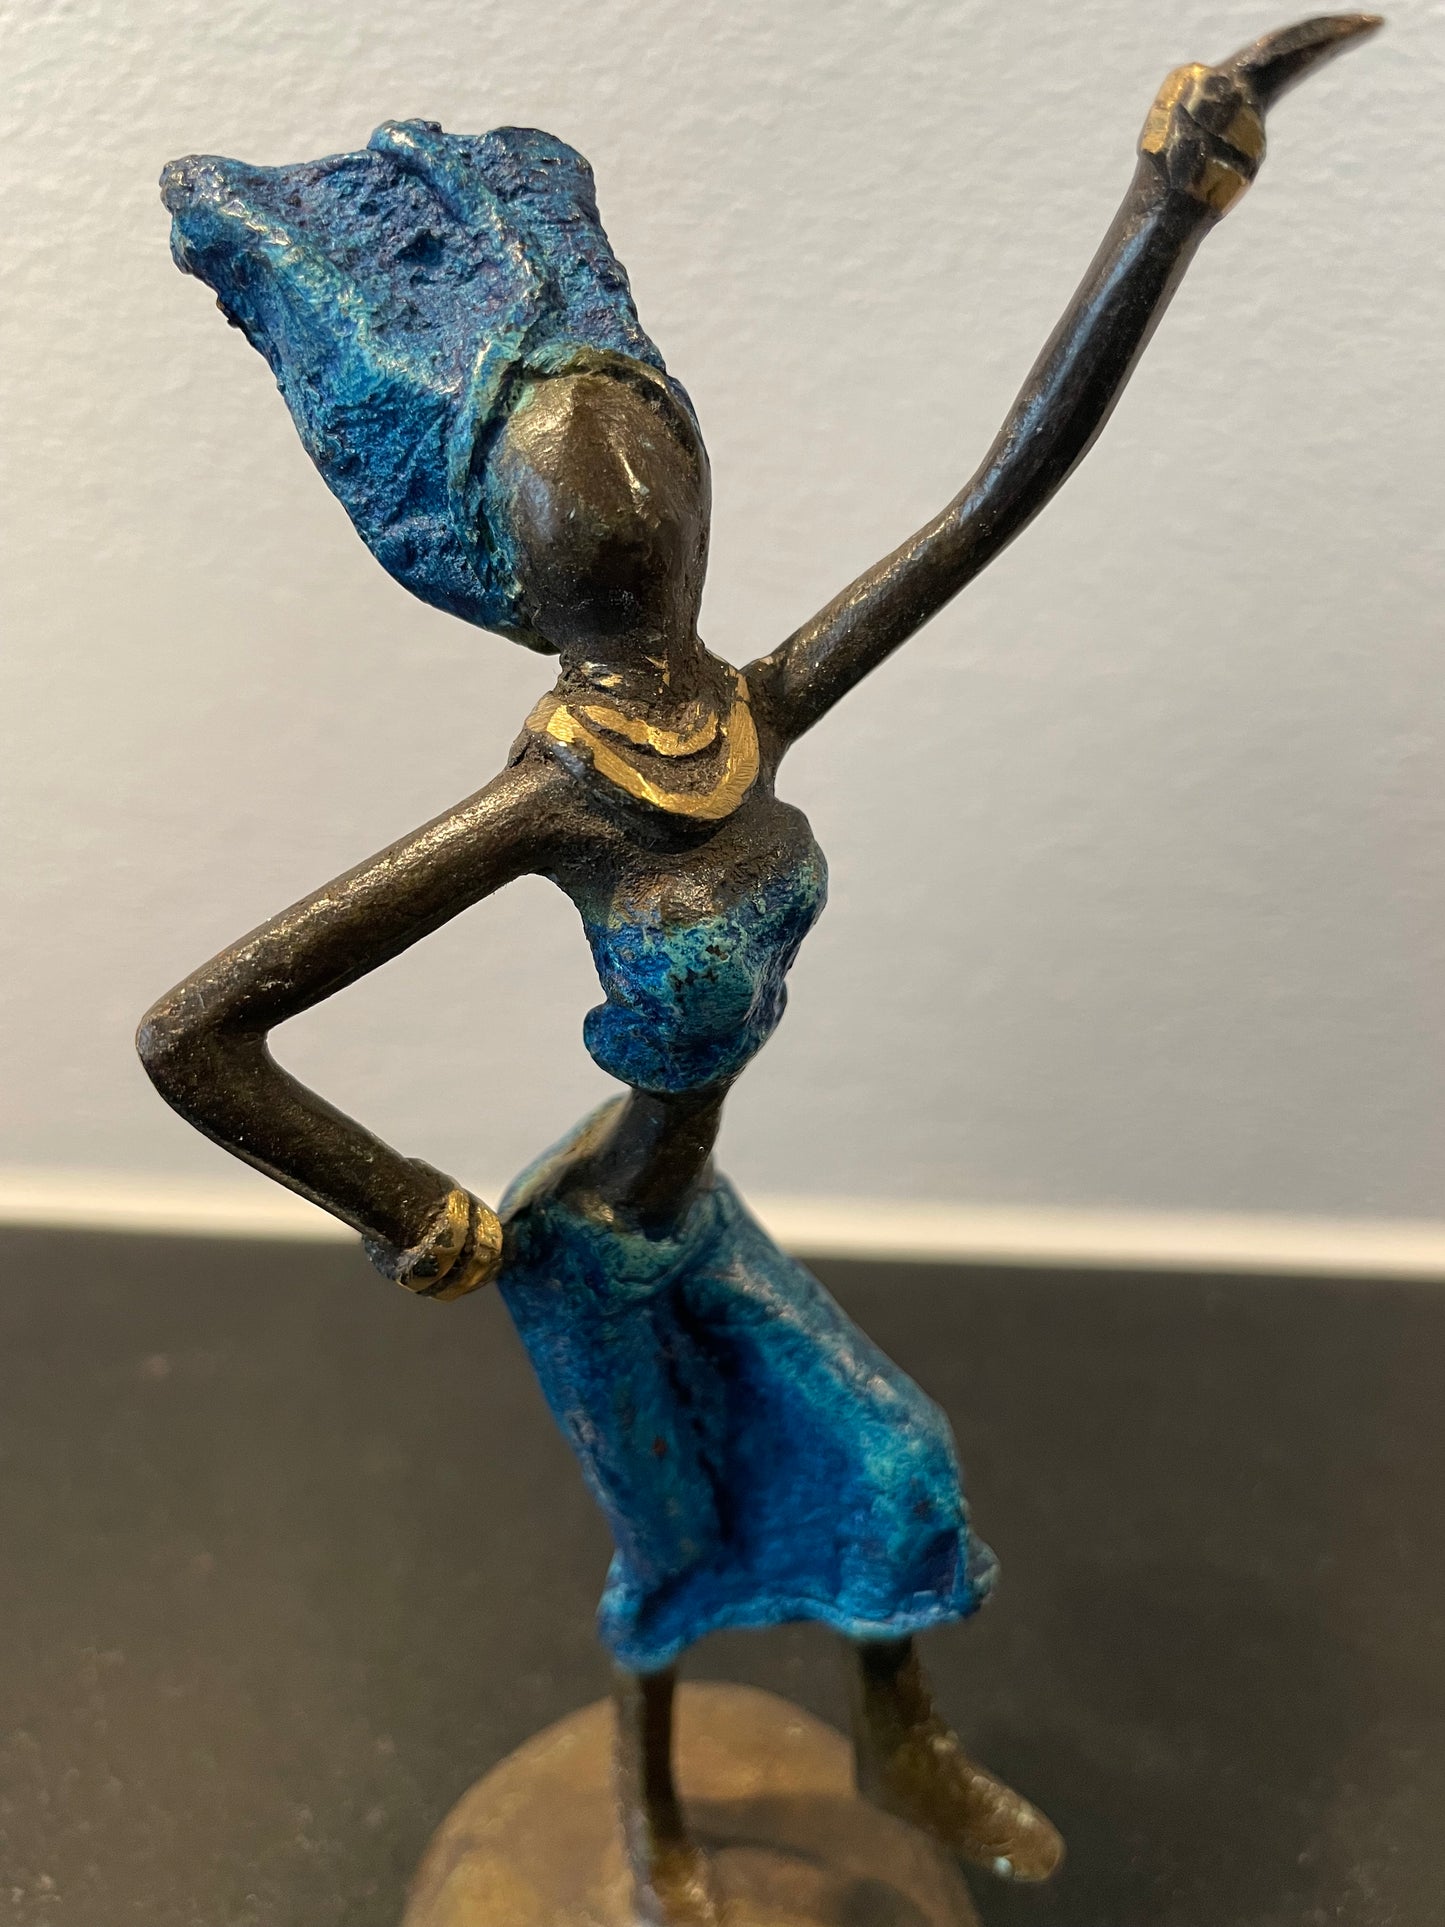 Brass art, Power woman 15-17 cm in recycled brass. Made Fair Trade in Burkina Faso